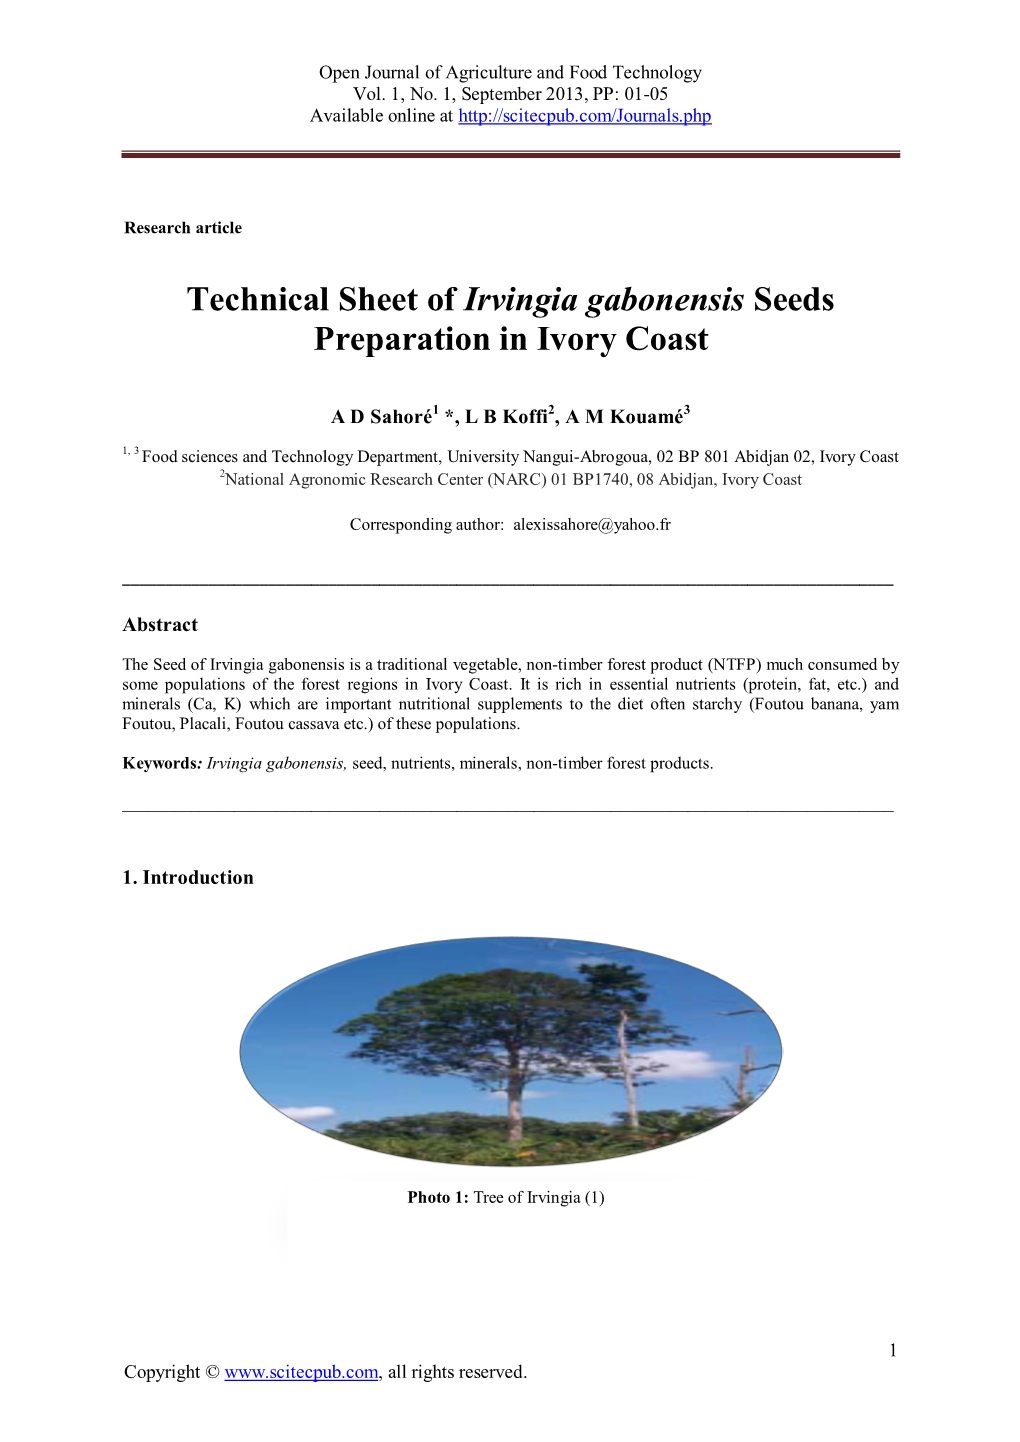 Technical Sheet of Irvingia Gabonensis Seeds Preparation in Ivory Coast